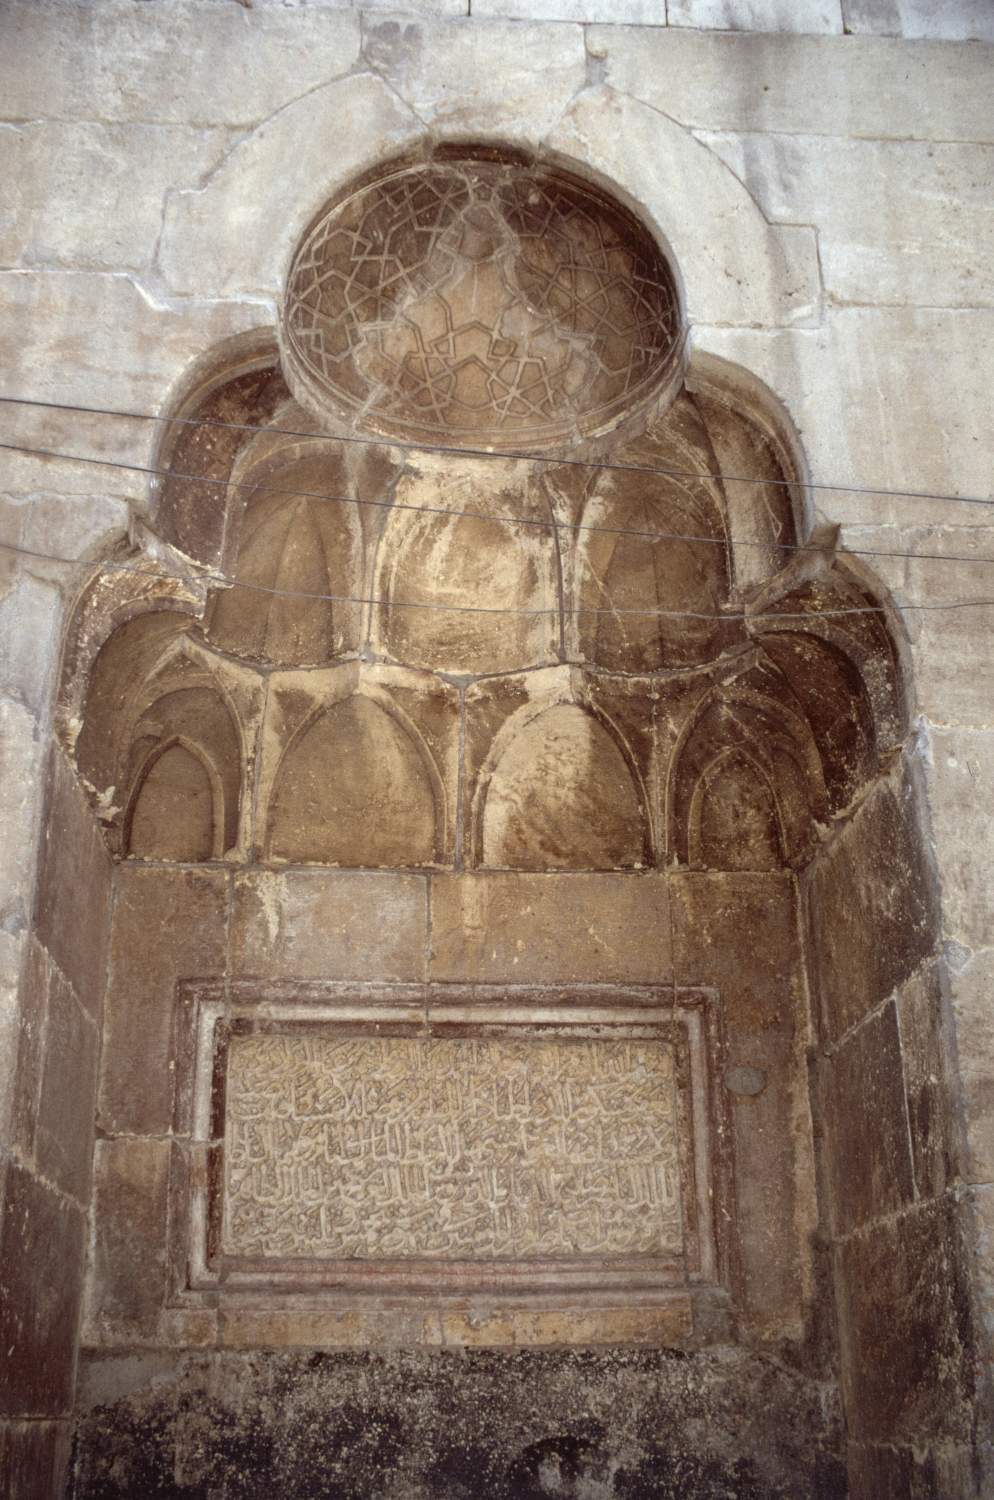 Jami' al-Hariri - Exterior view; murqarnas and inscription near mosque entrance.